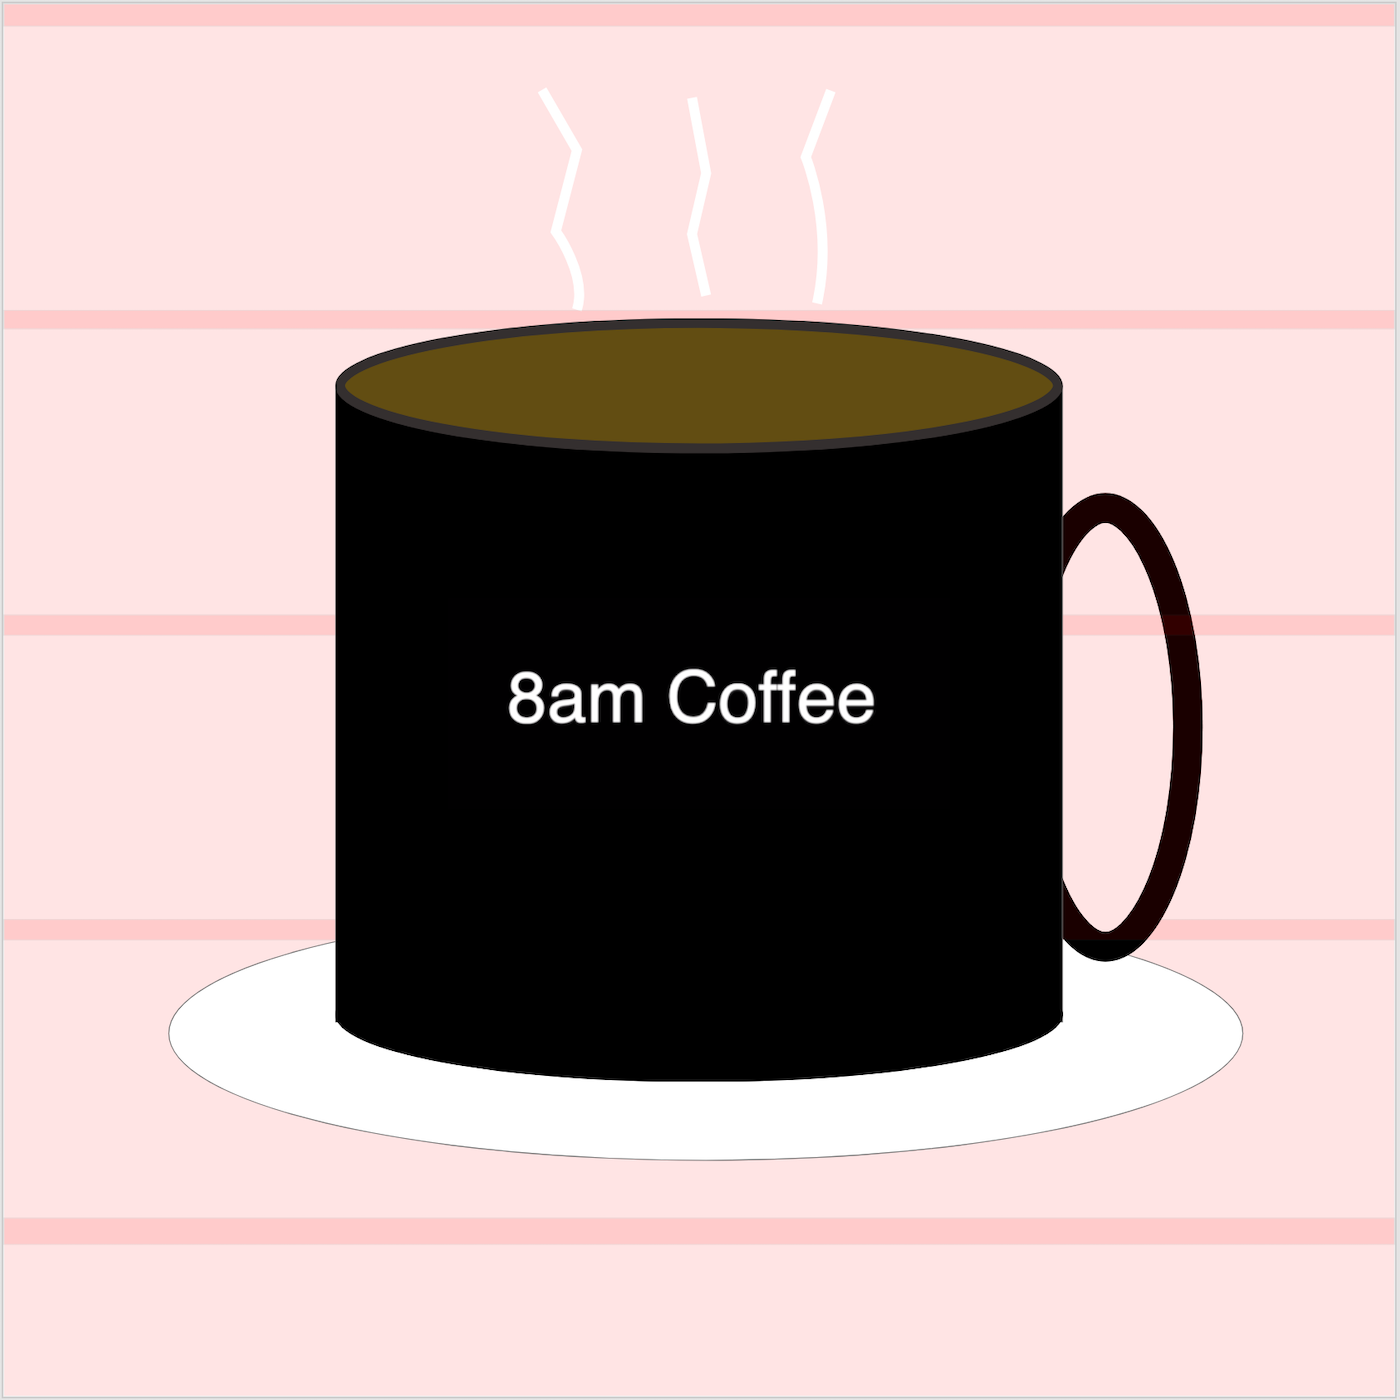 8am Coffee